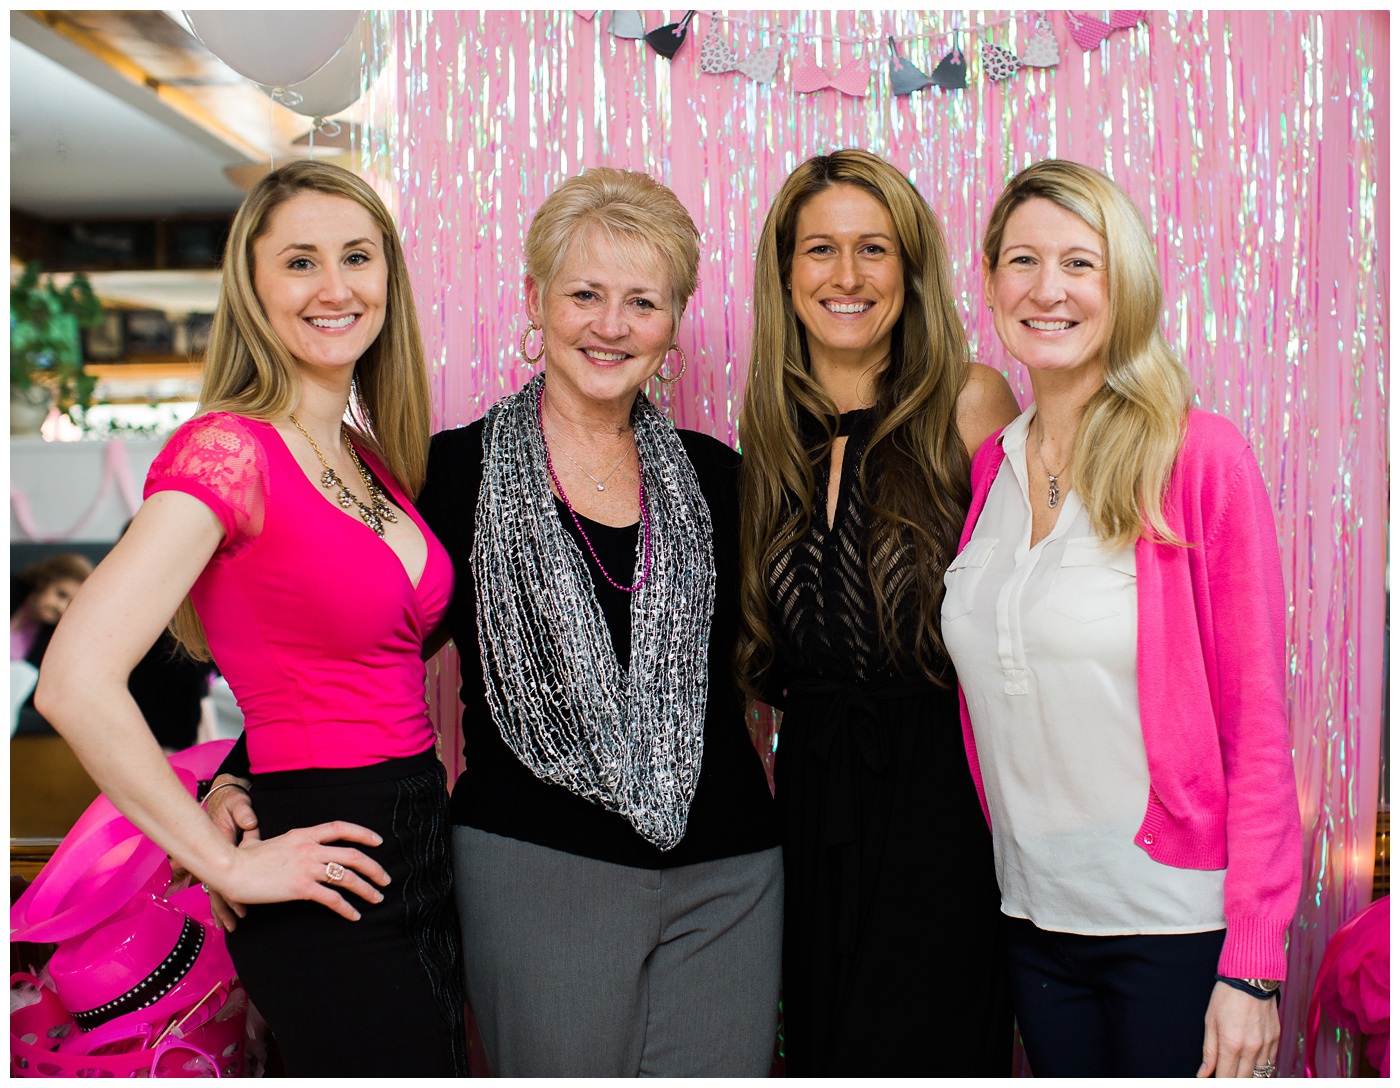 A surprise party for a breast cancer survivor in Virginia Beach Virginia!